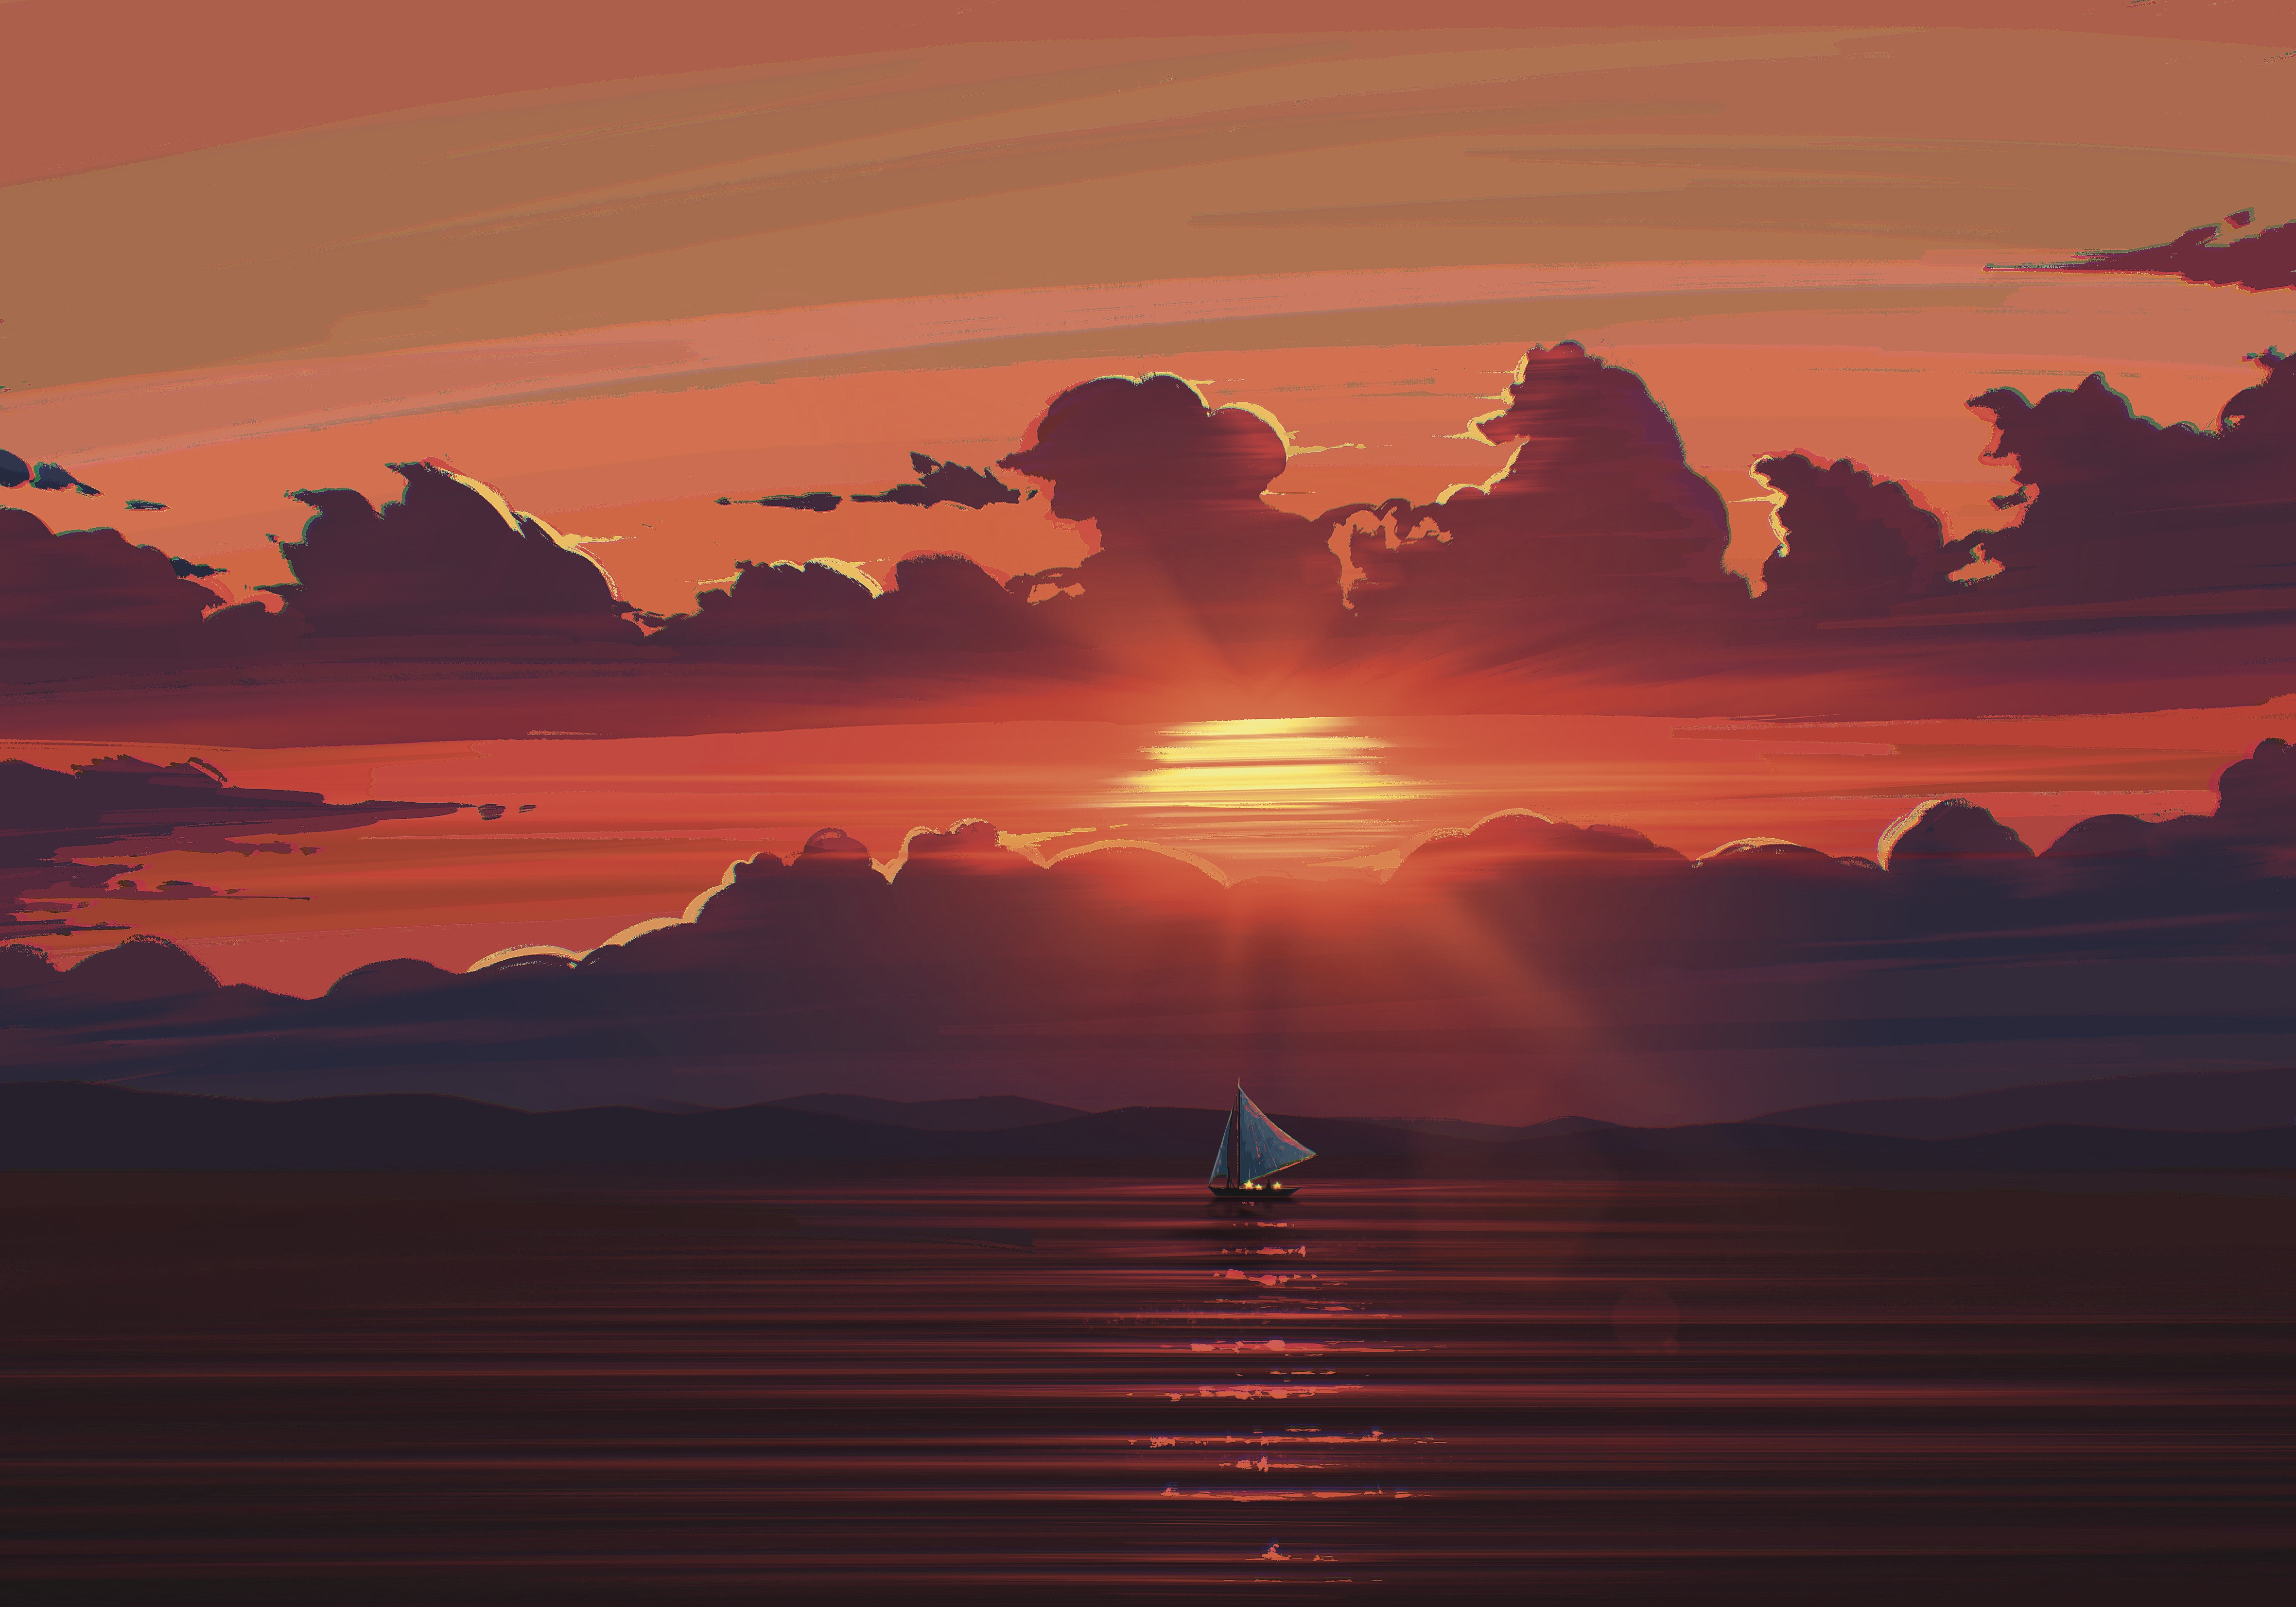 Digital Art Artwork Illustration Painting Landscape Sunset Sea Water Clouds Sun Boat Sailing Ship Mo 4724x3307